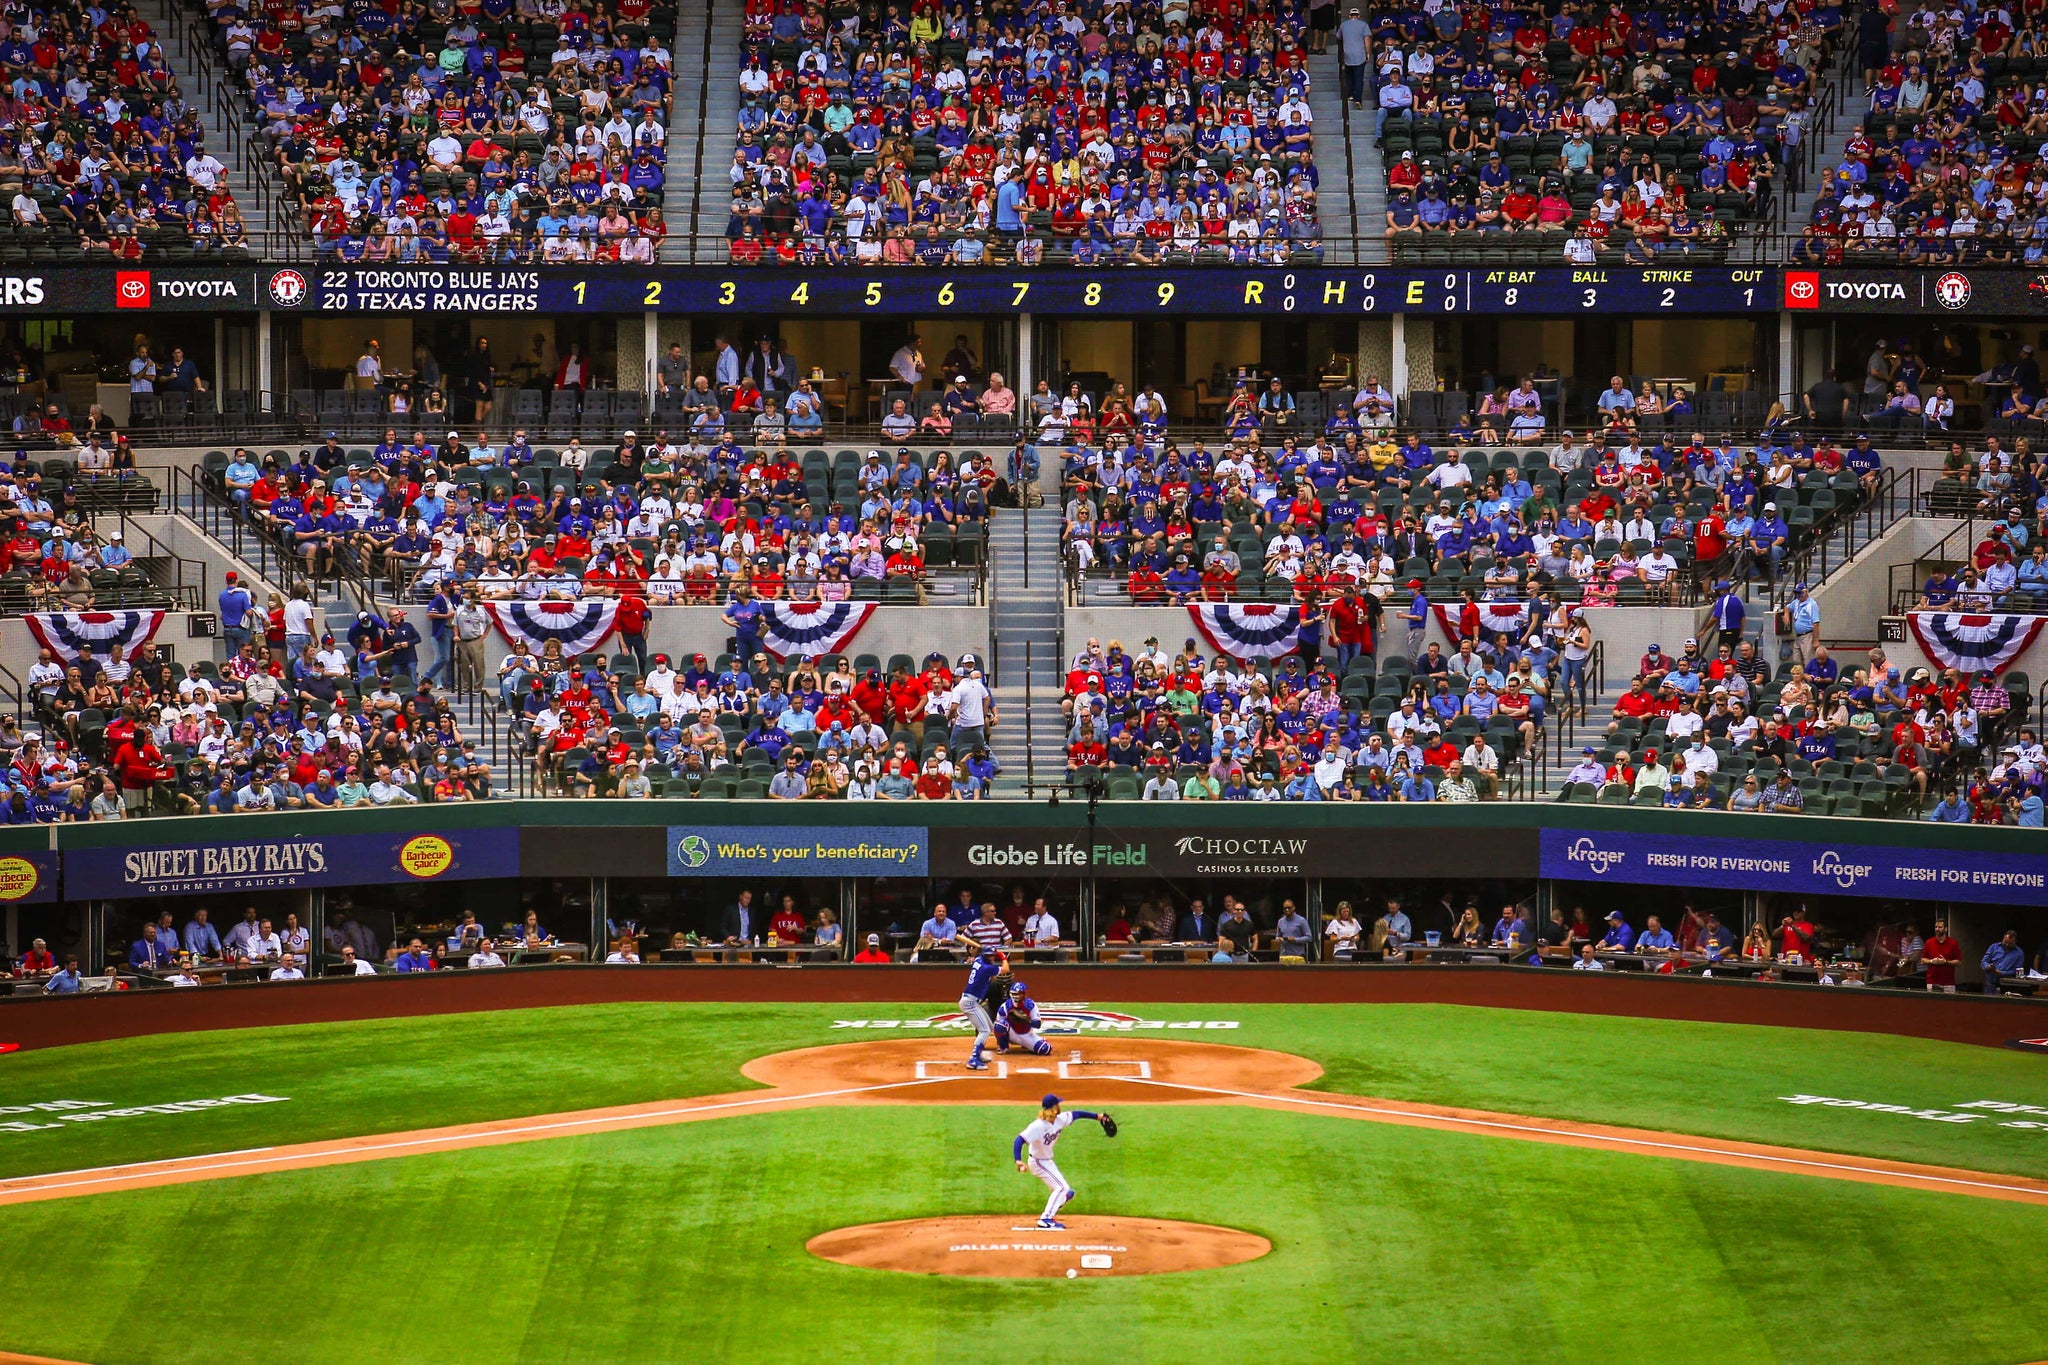 Believe It: Texas Rangers American League Champs Baseball Sports Book –  Pediment Publishing